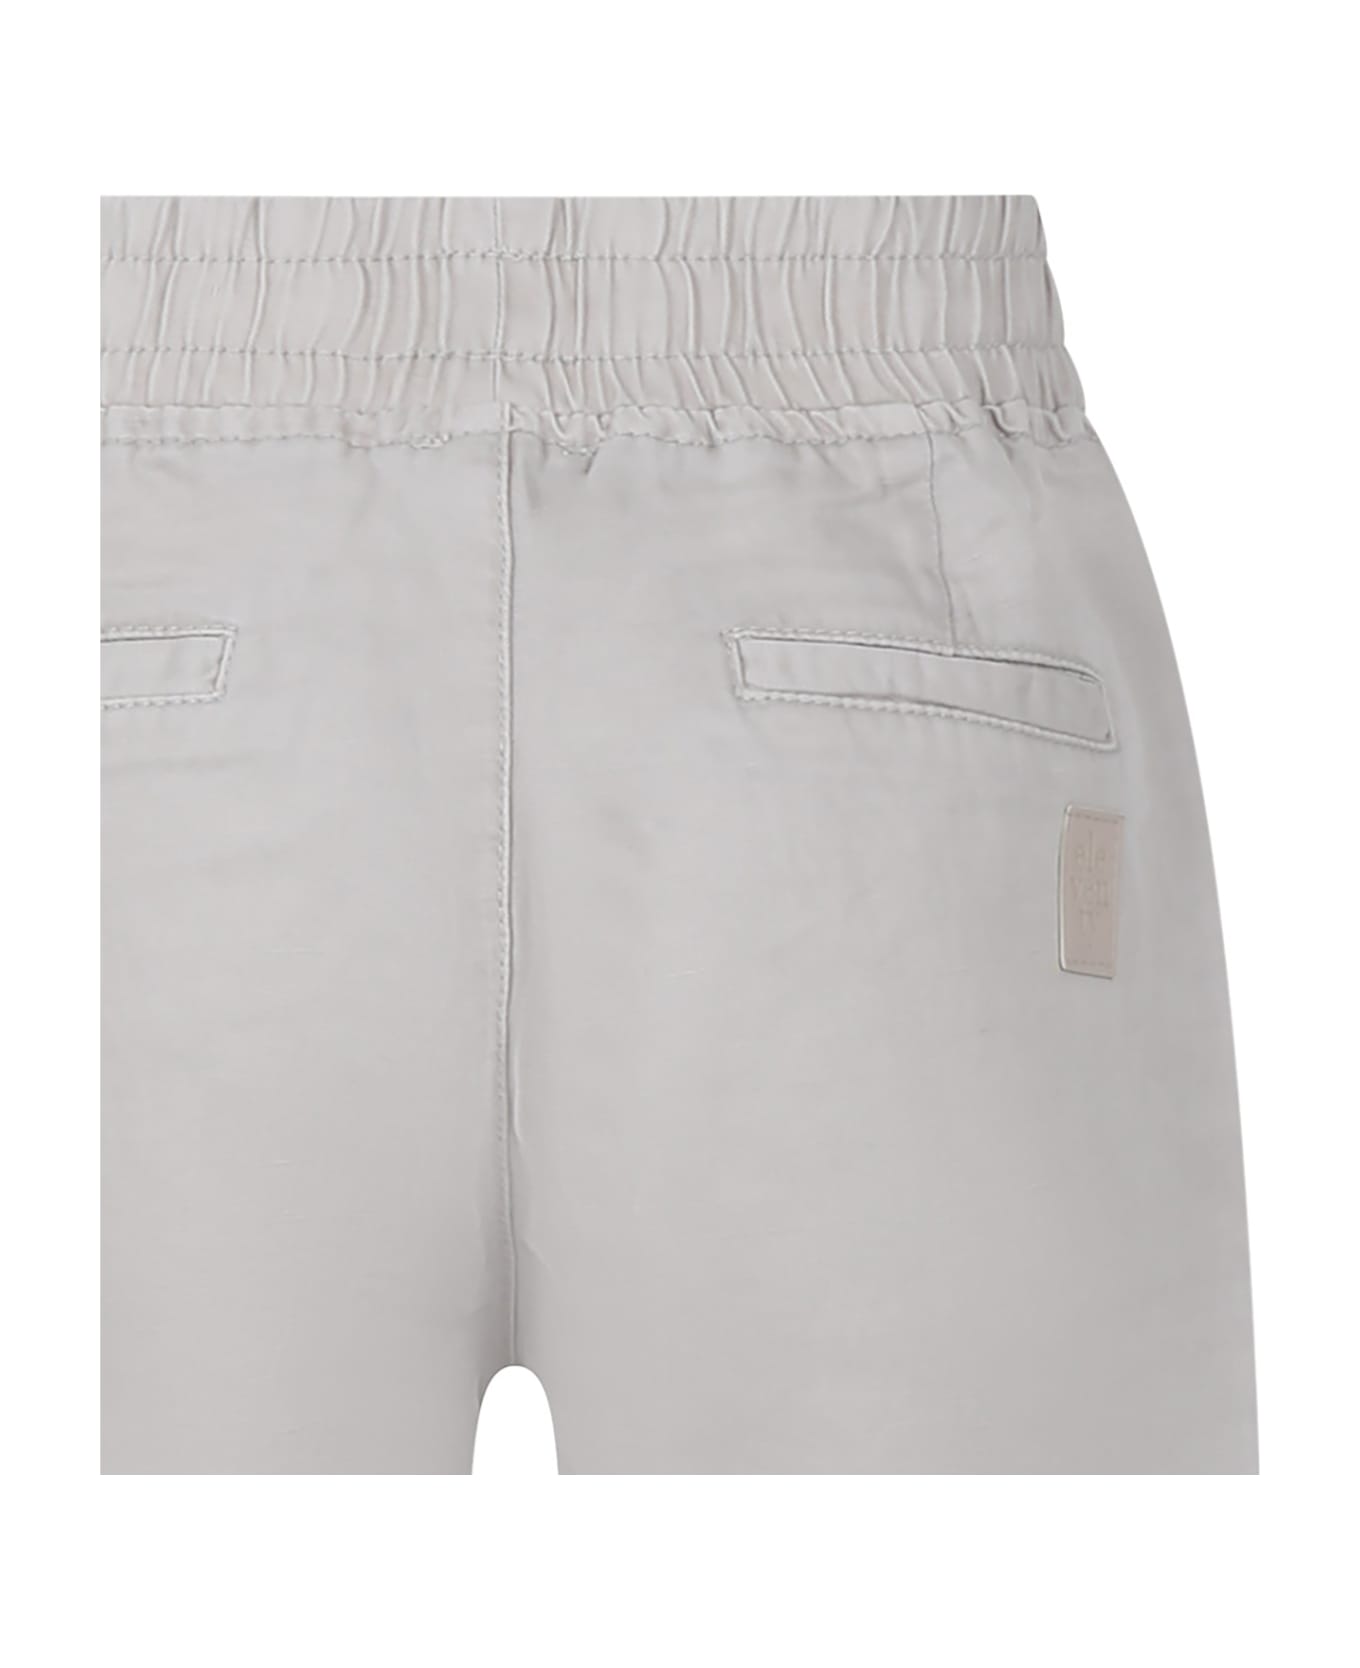 Eleventy Gray Casual Shorts For Boy - Grey